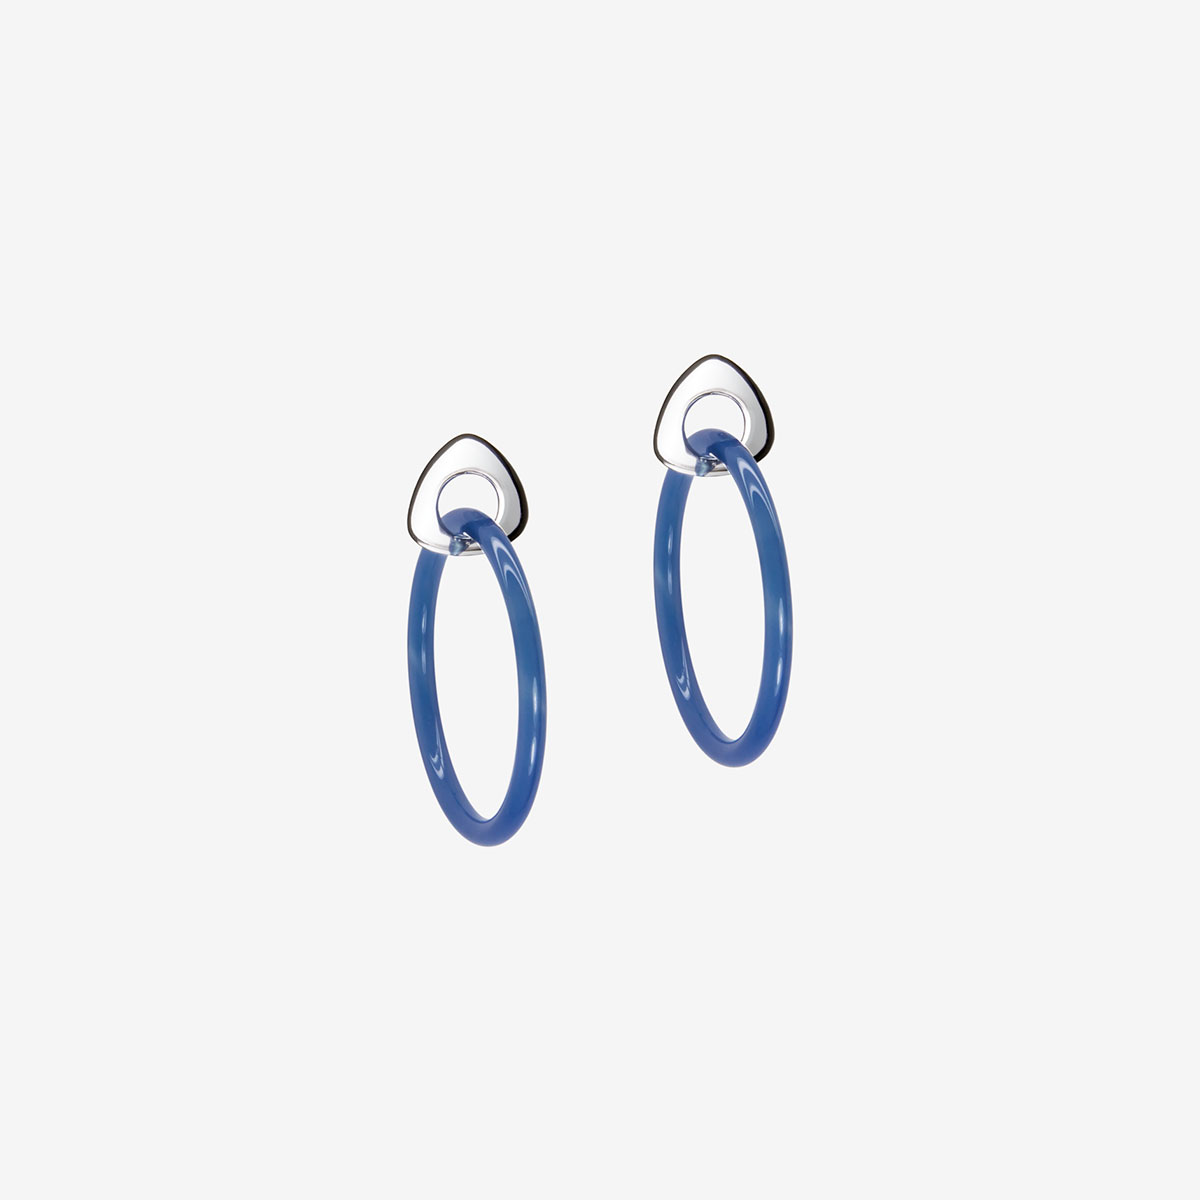 handmade Lya earrings in sterling silver and blue agate designed by Belen Bajo